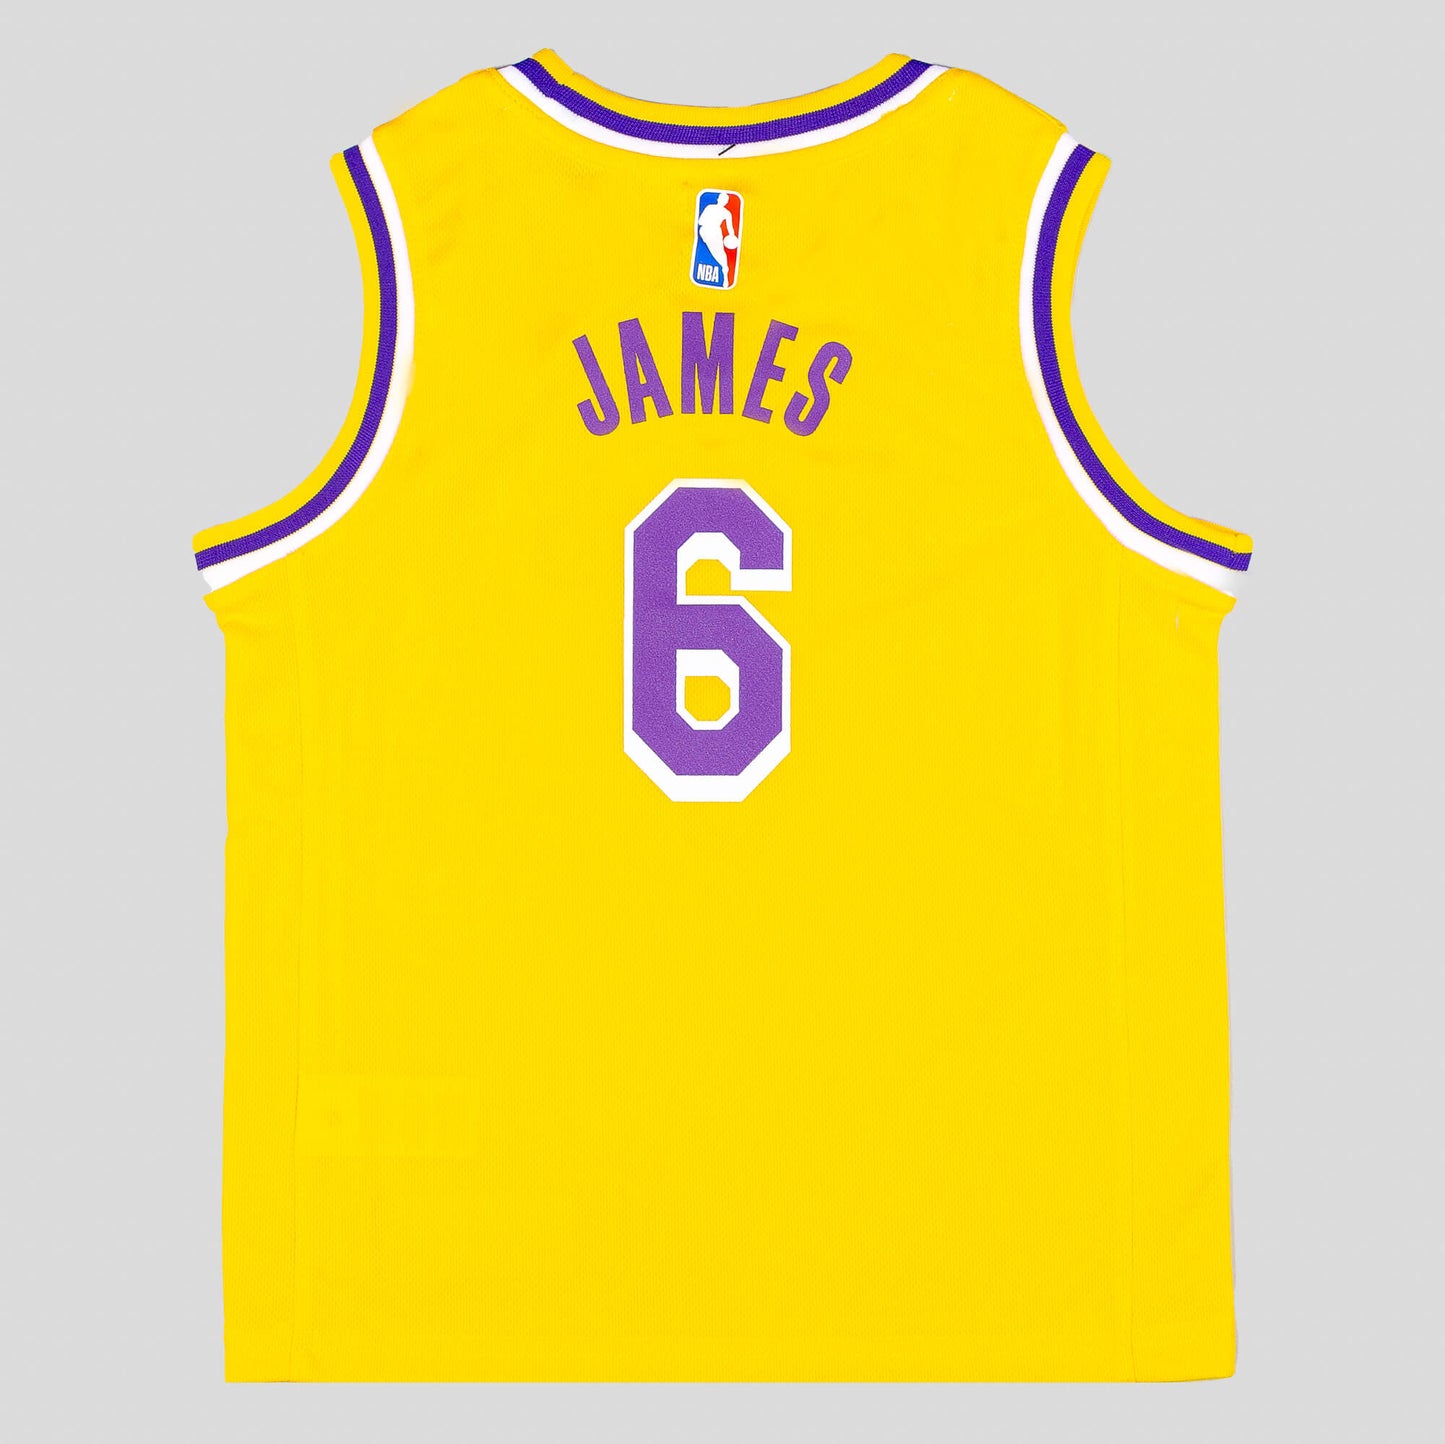 Nike 0-7 Icon Replica Jersey Los Angeles Lakers Lebron James – Nr. 6 Yellow/Purple